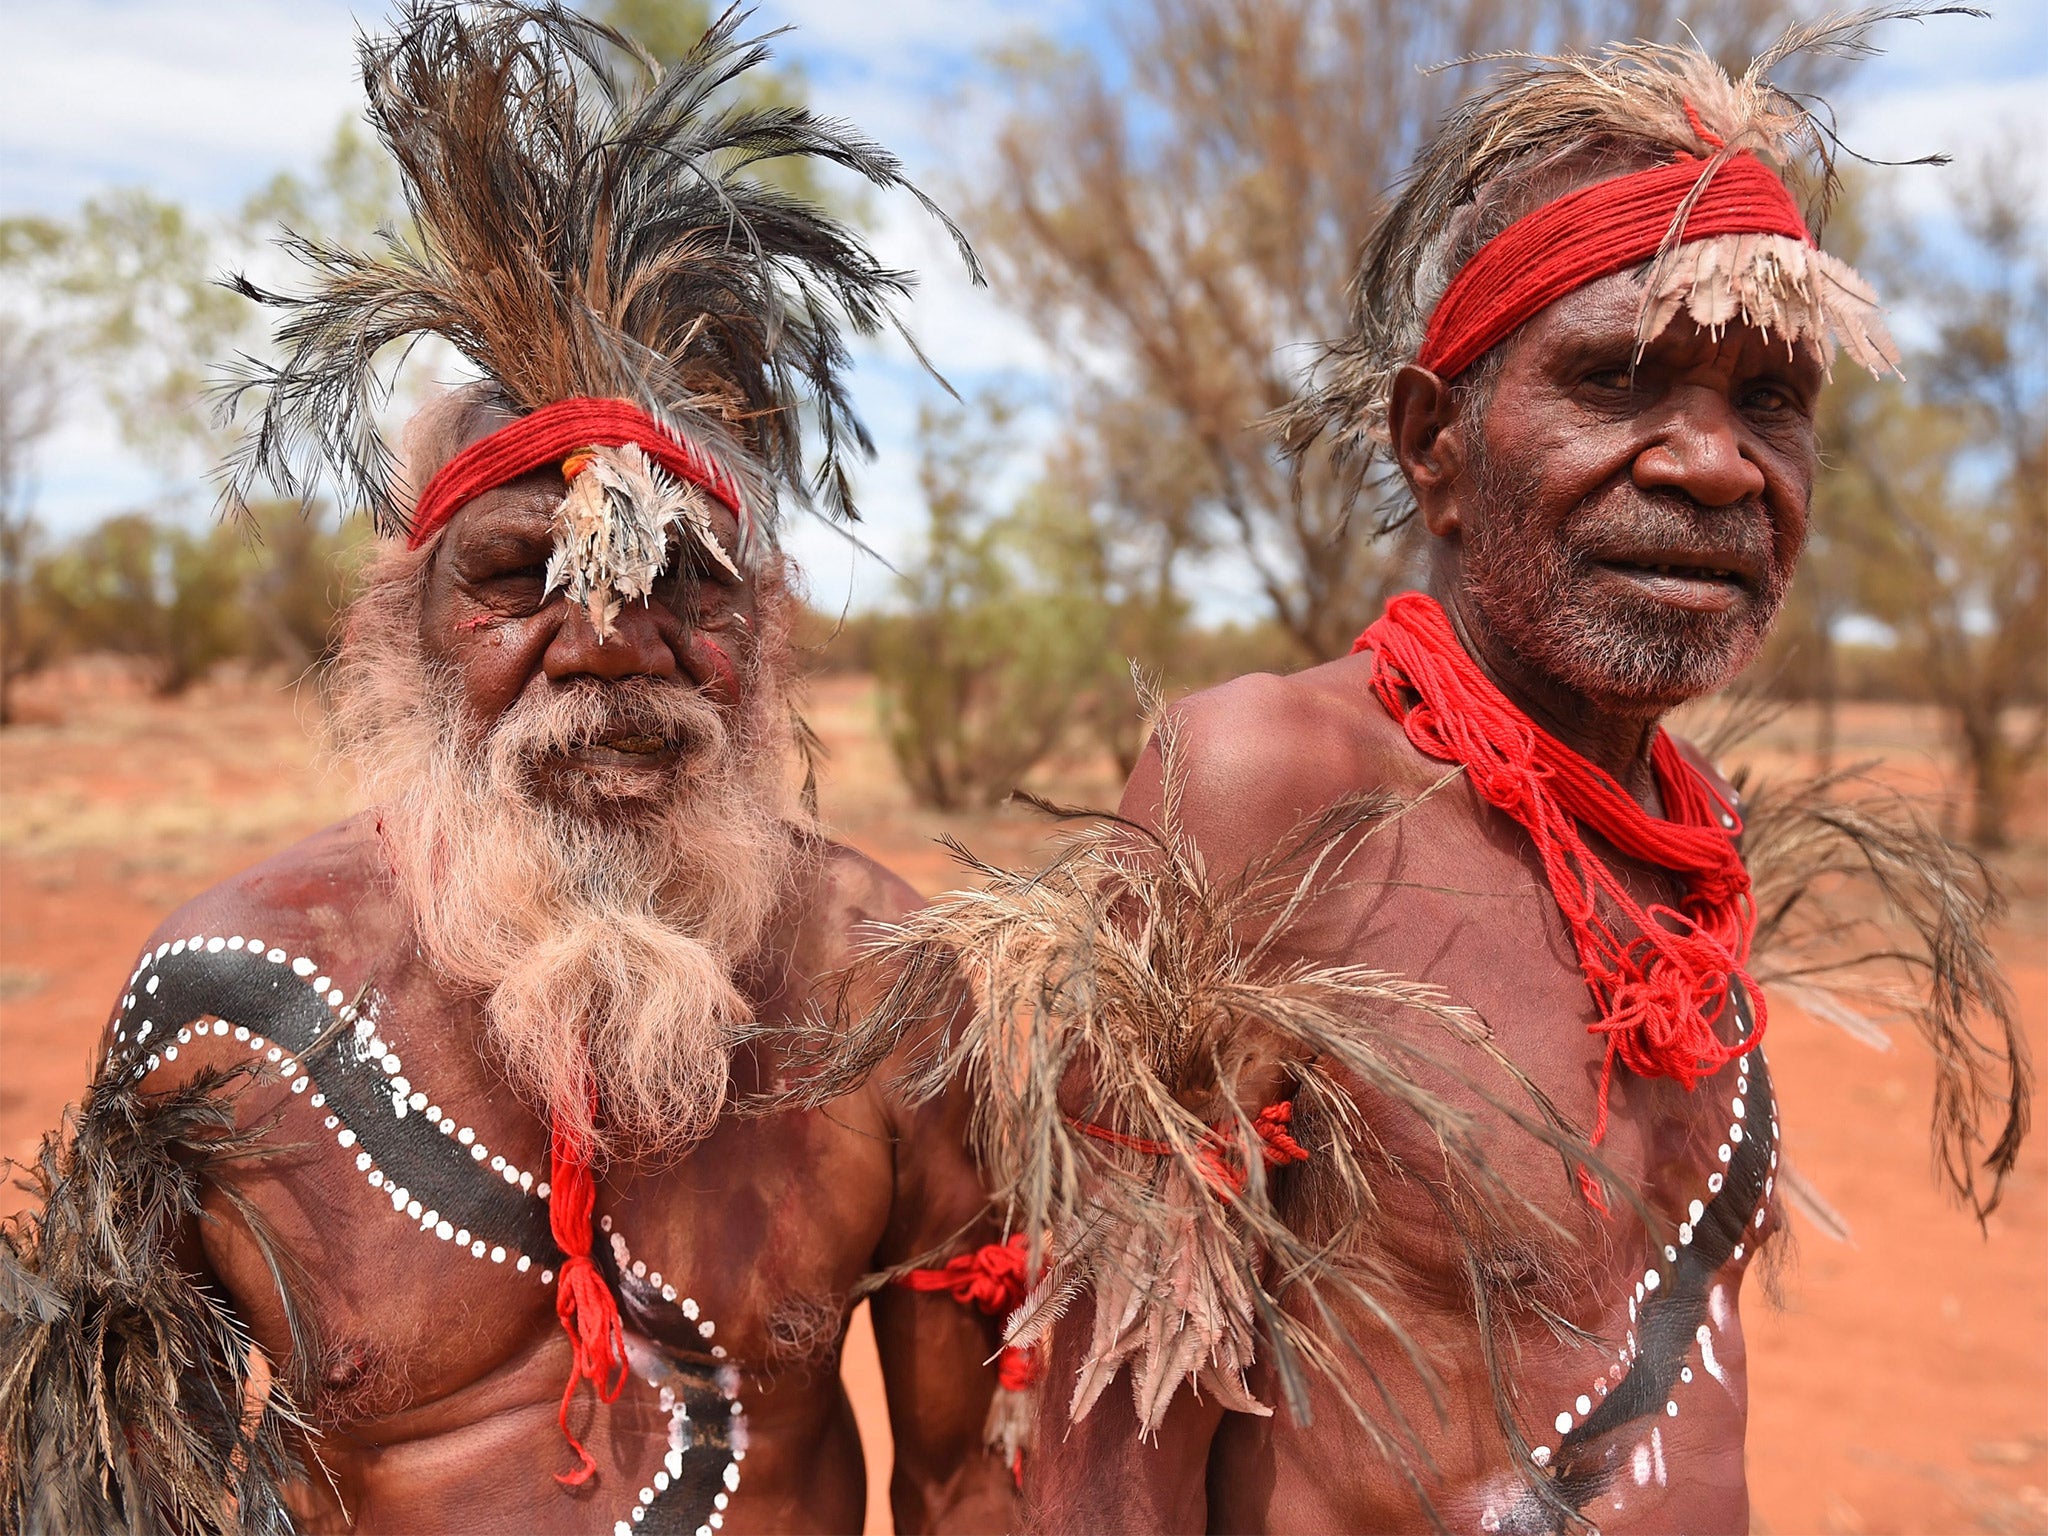 Aboriginal men at the anniversary celebrations in Mutitjulu